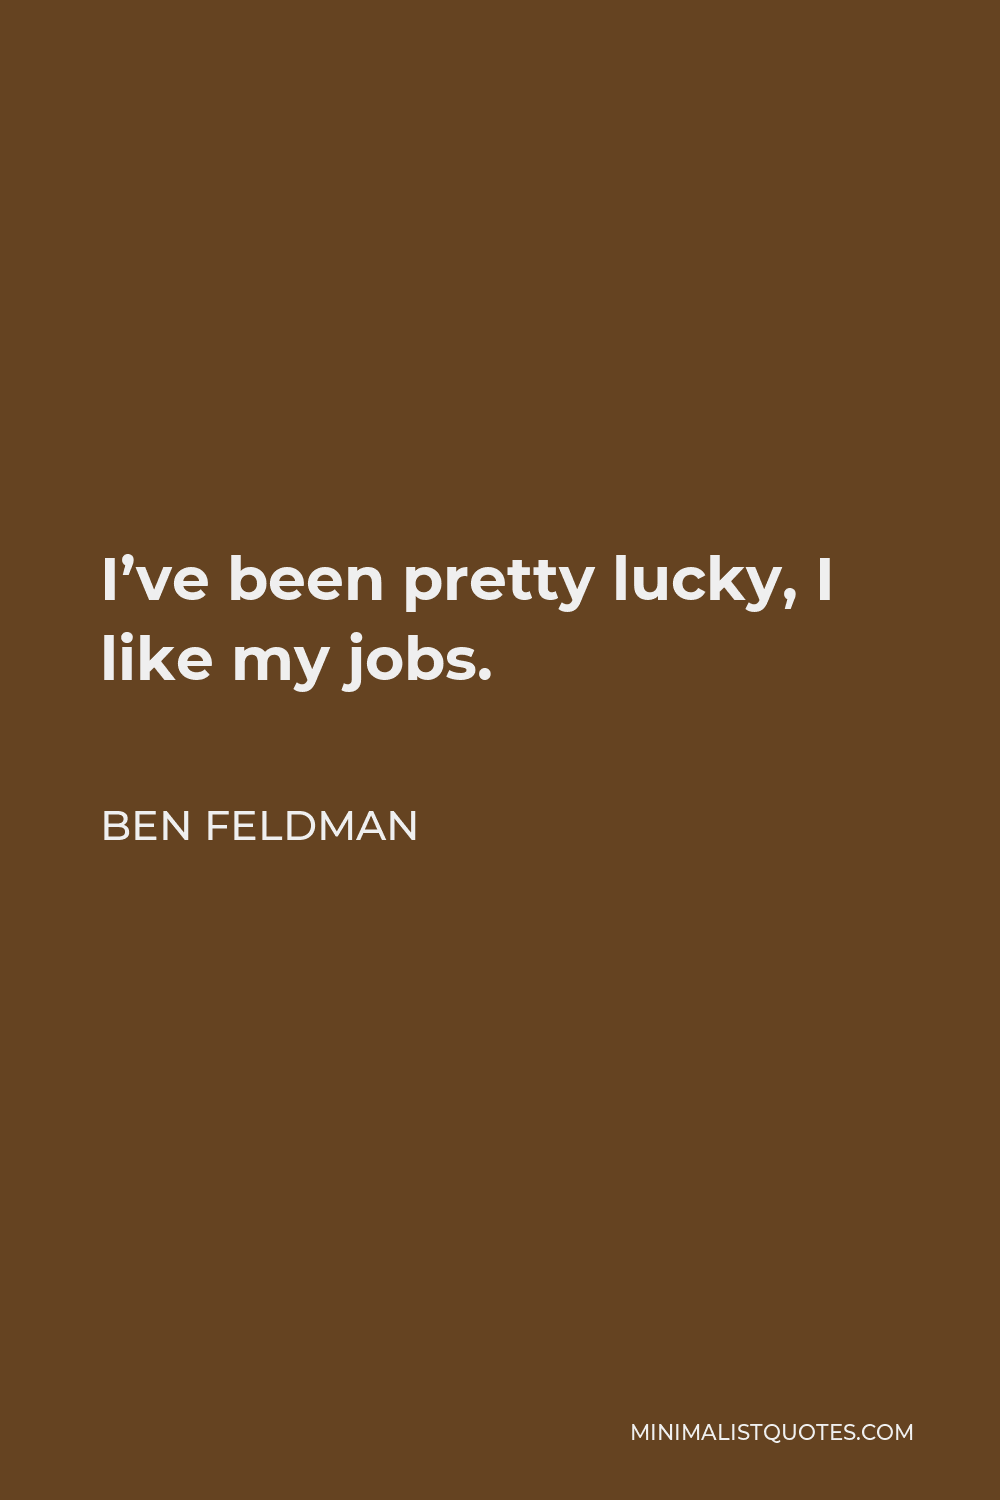 Ben Feldman Quote - I’ve been pretty lucky, I like my jobs.